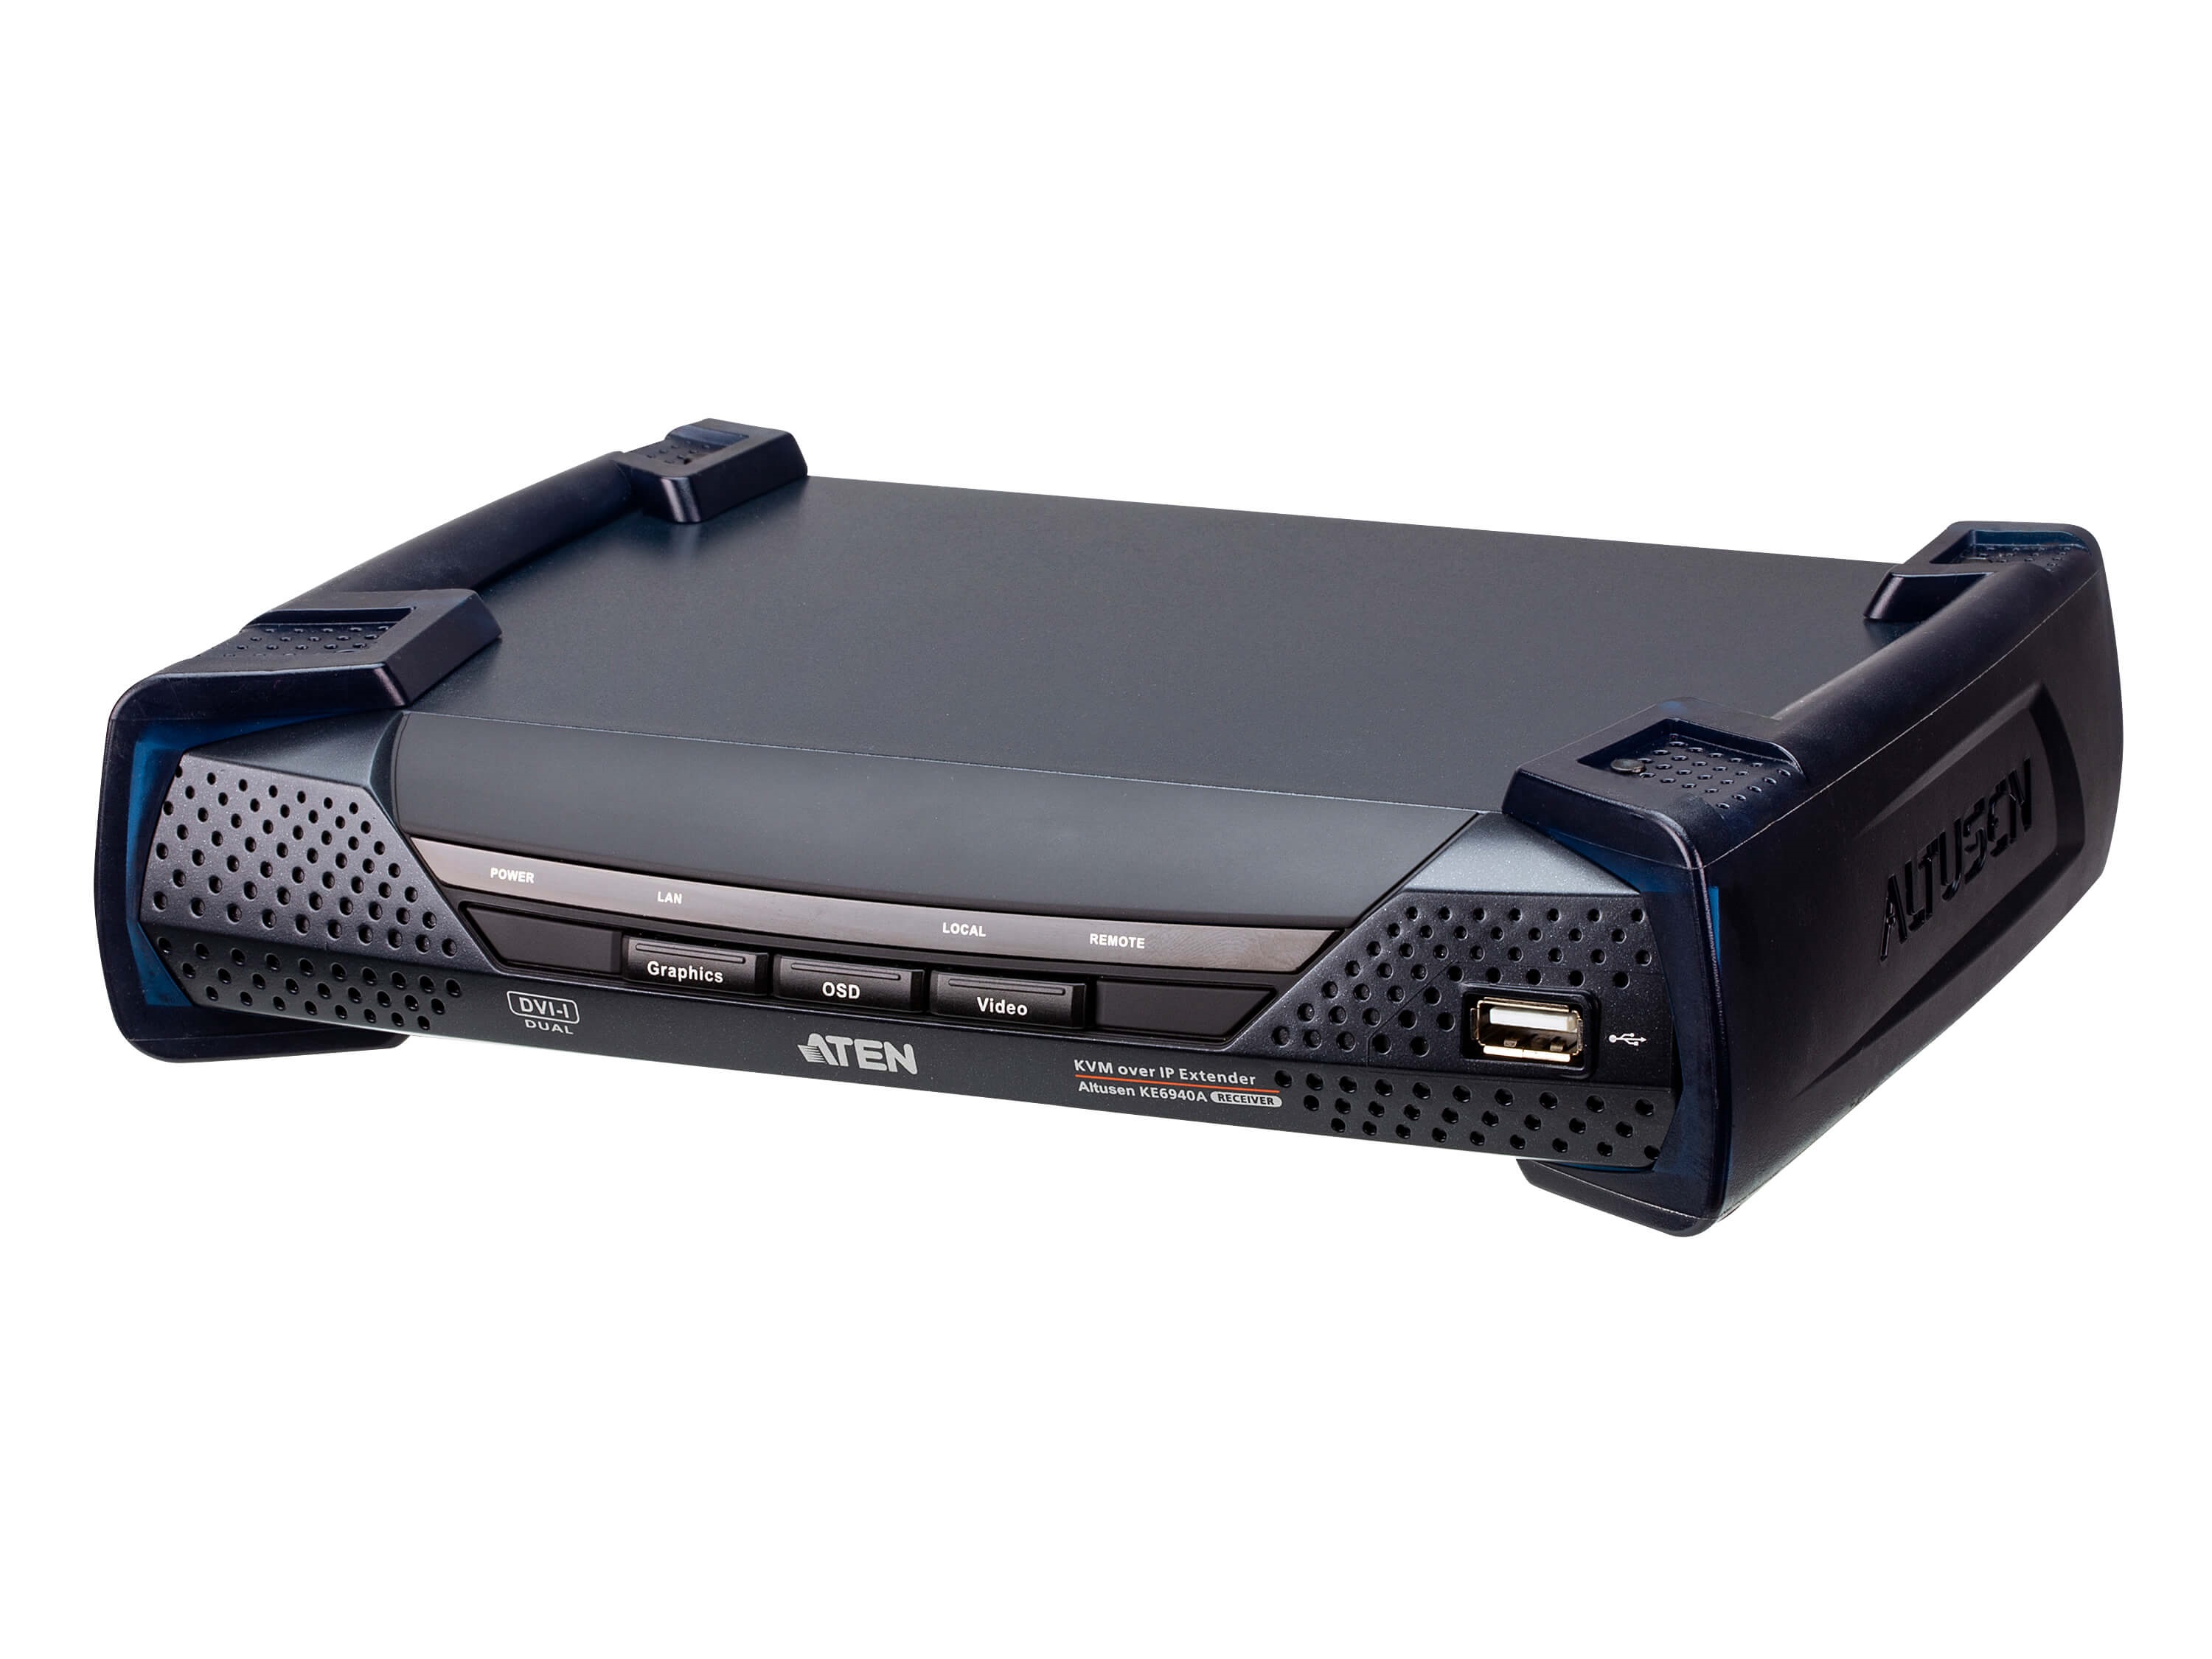 KE6940AR DVI-I Dual Display KVM over IP Receiver by Aten